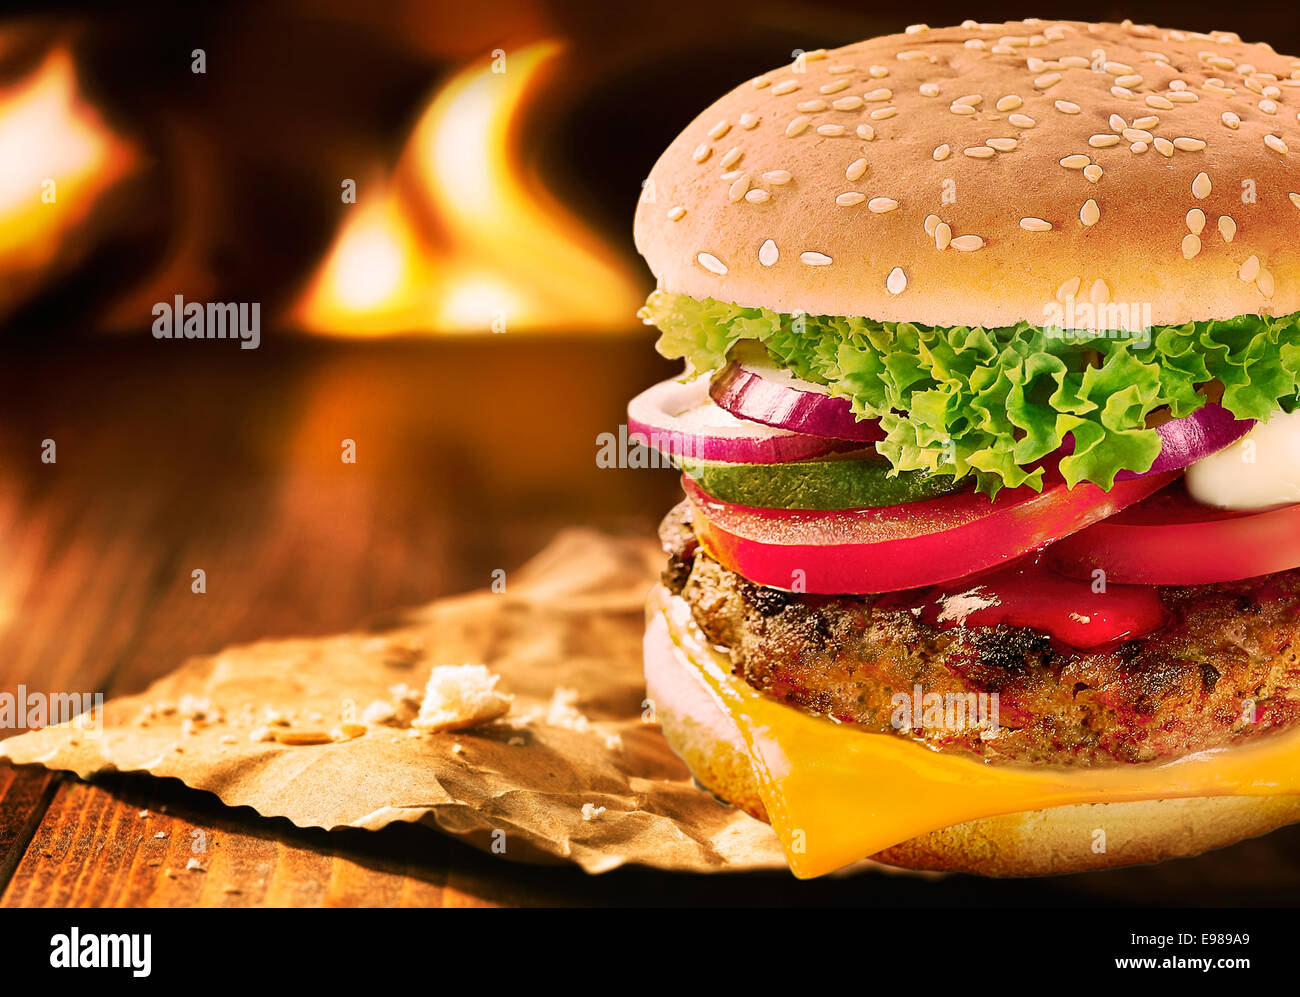 Burger Kings Whopper Jingle Has Become a Viral Phenomenon